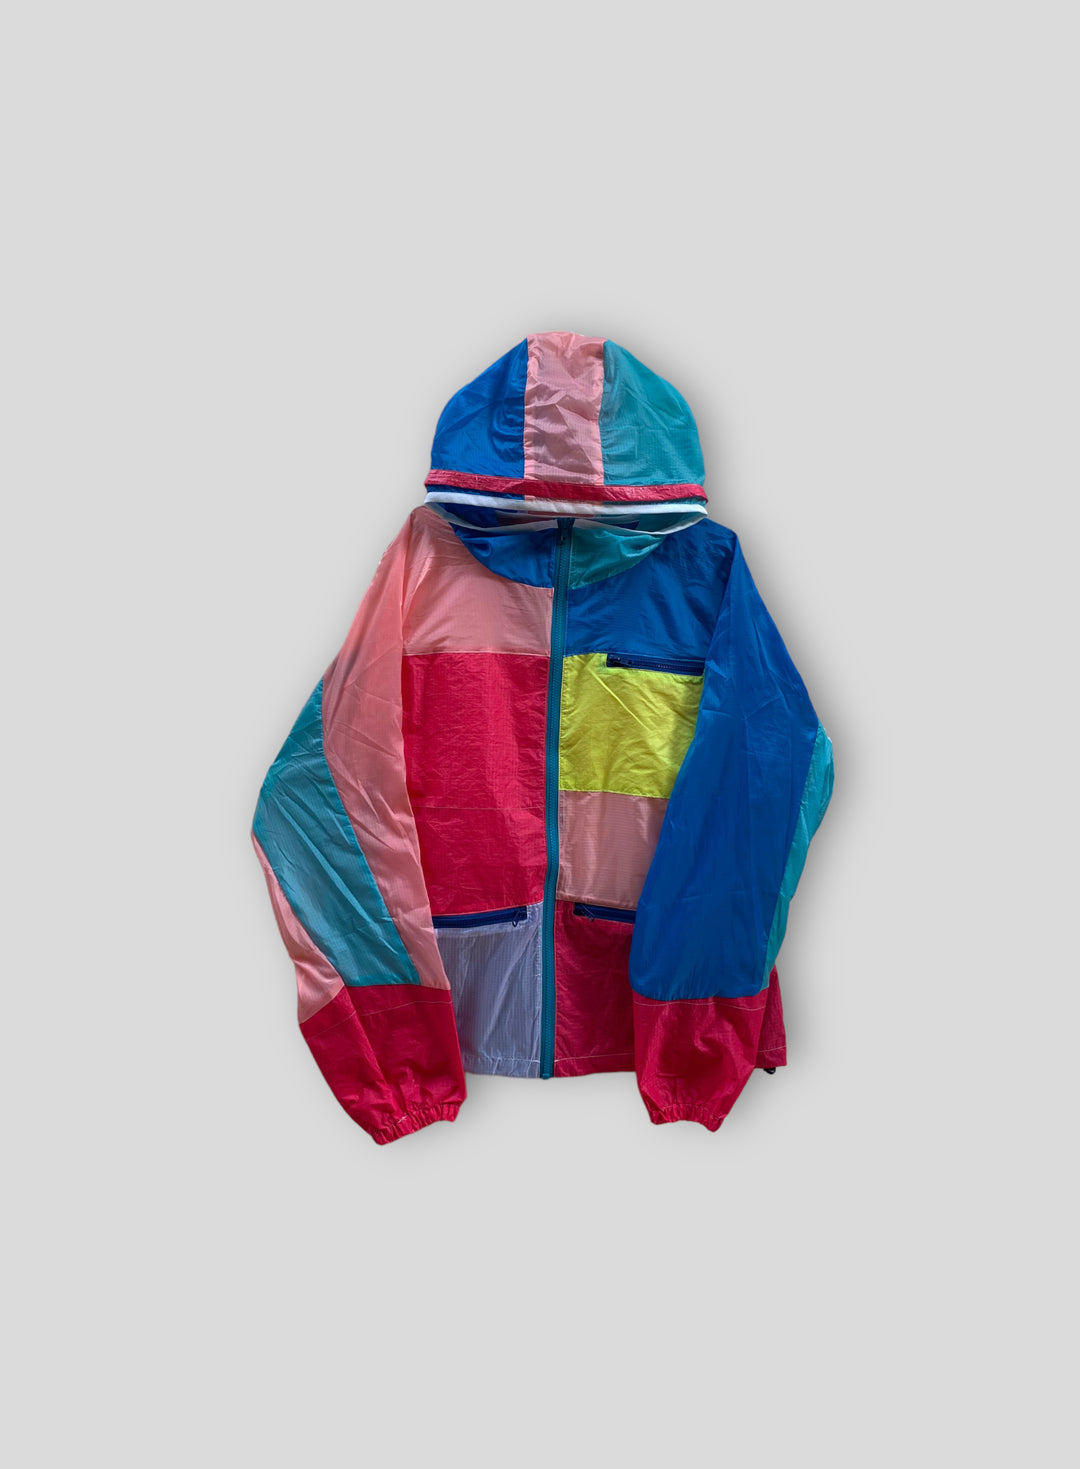 Upcycled Parachute Jacket (Large - L.a.29.23)